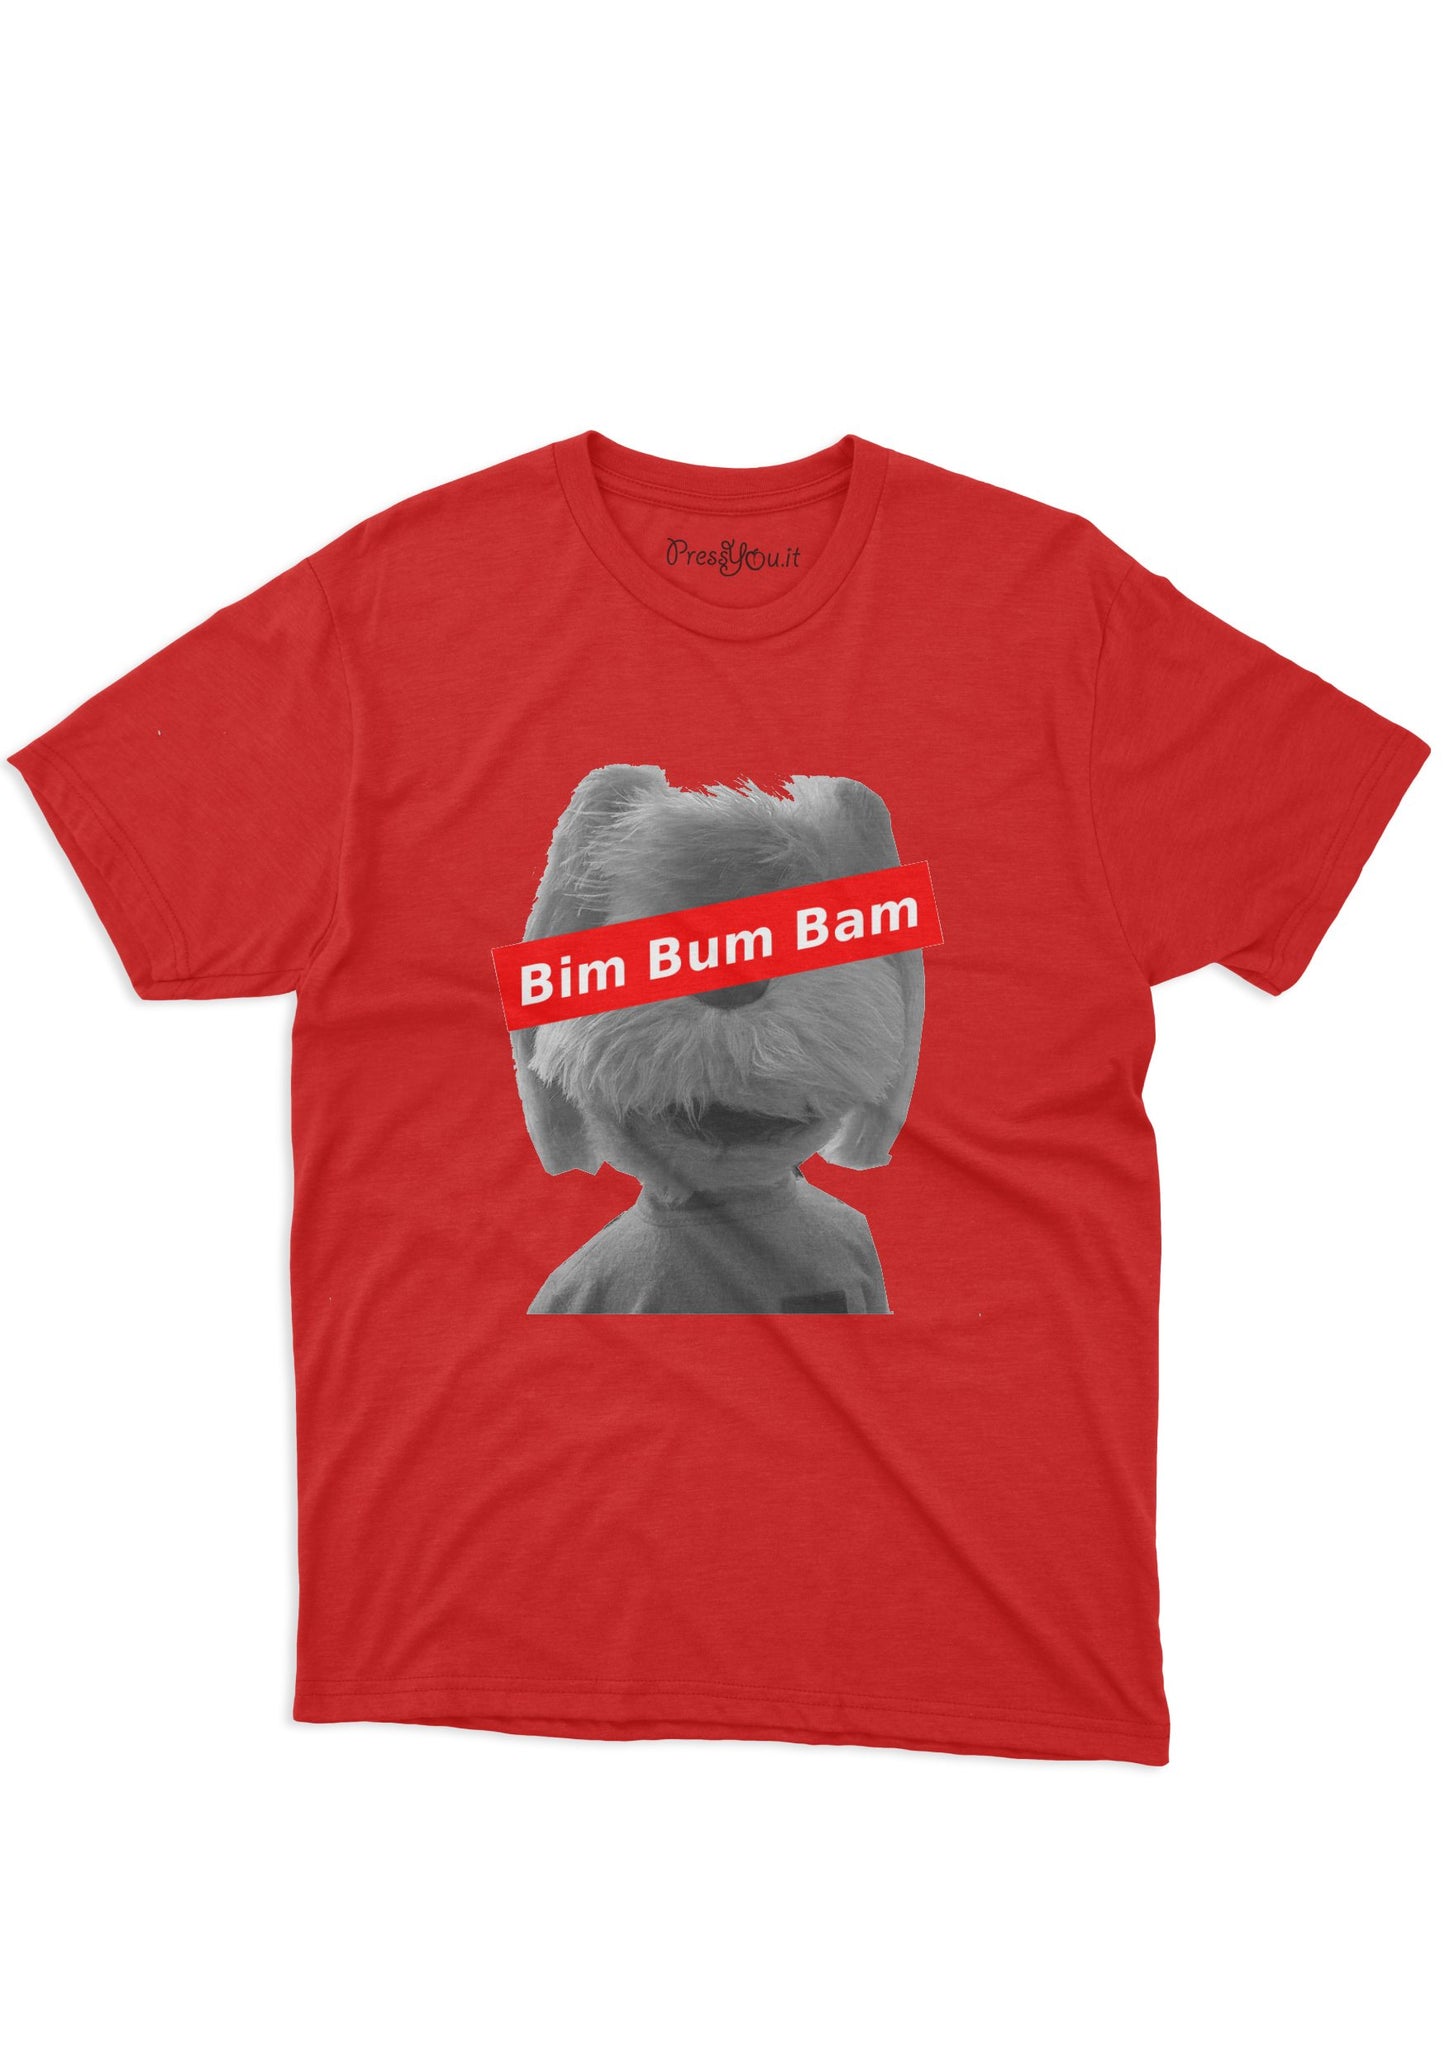 t-shirt-bim bum bam 90s television